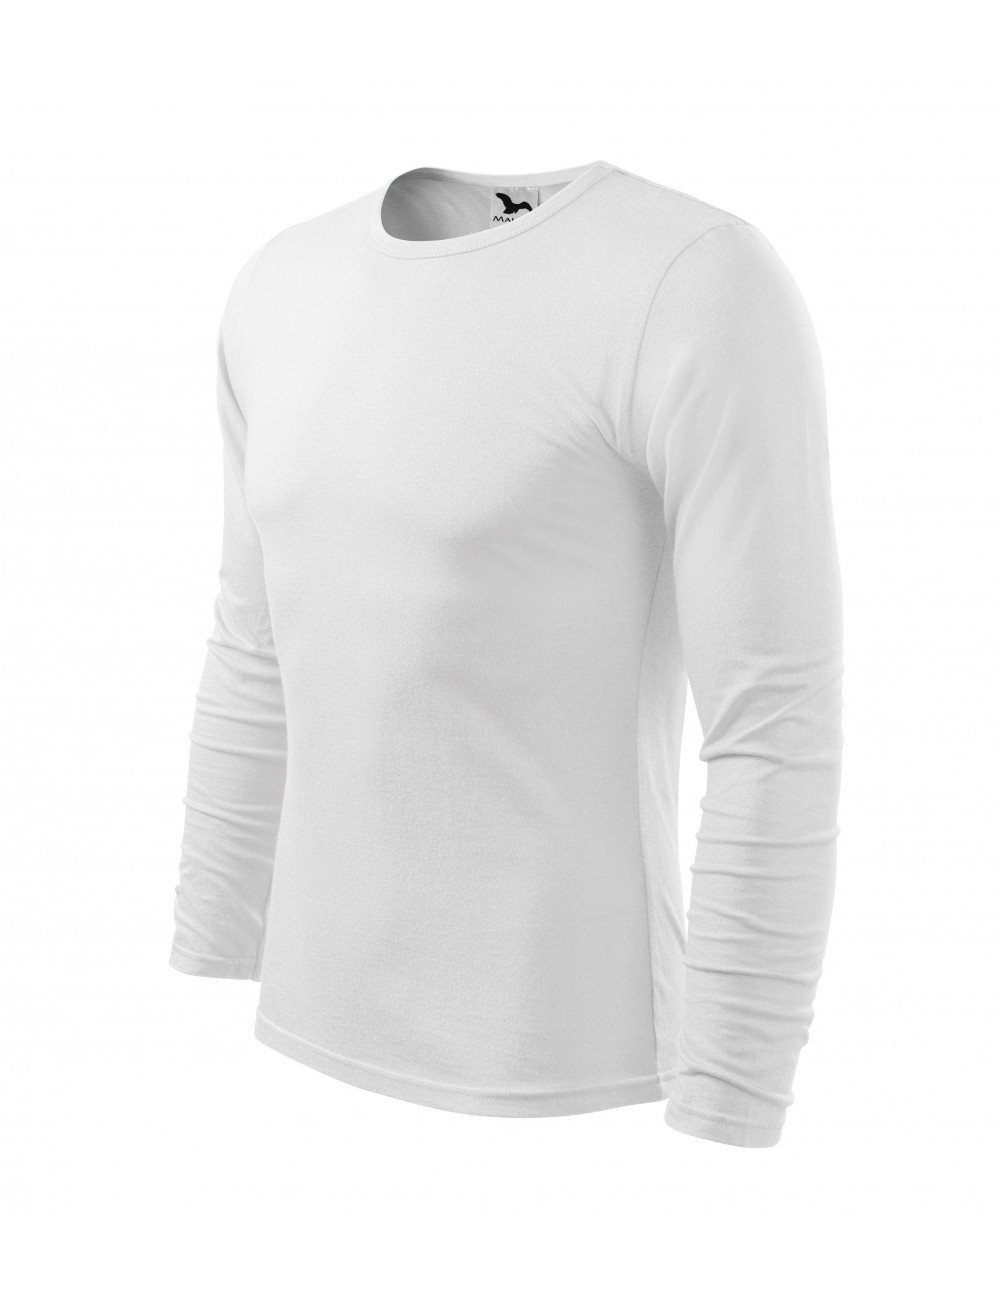 Koszulka męska fit-t long sleeve 119 biały Adler Malfini